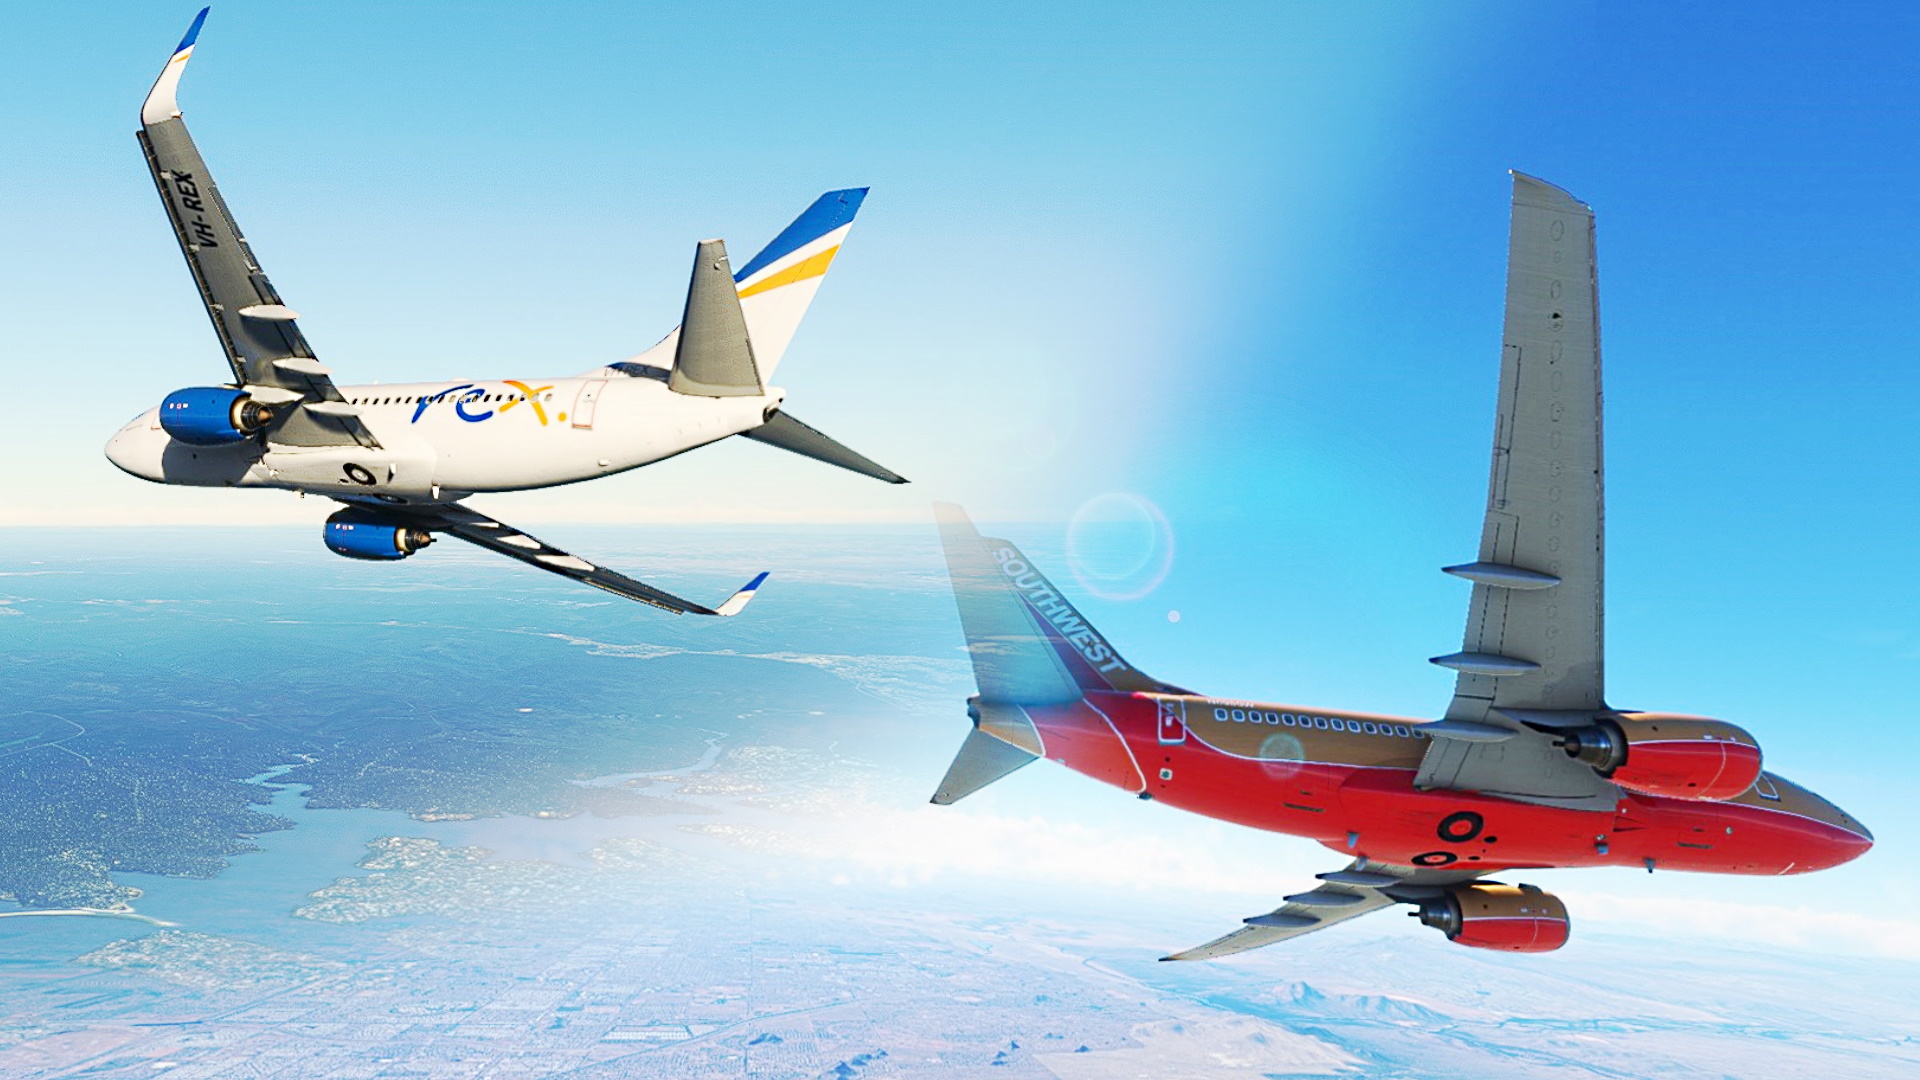 PMDG 737-600 for Microsoft Flight Simulator - PMDG Simulations LLC